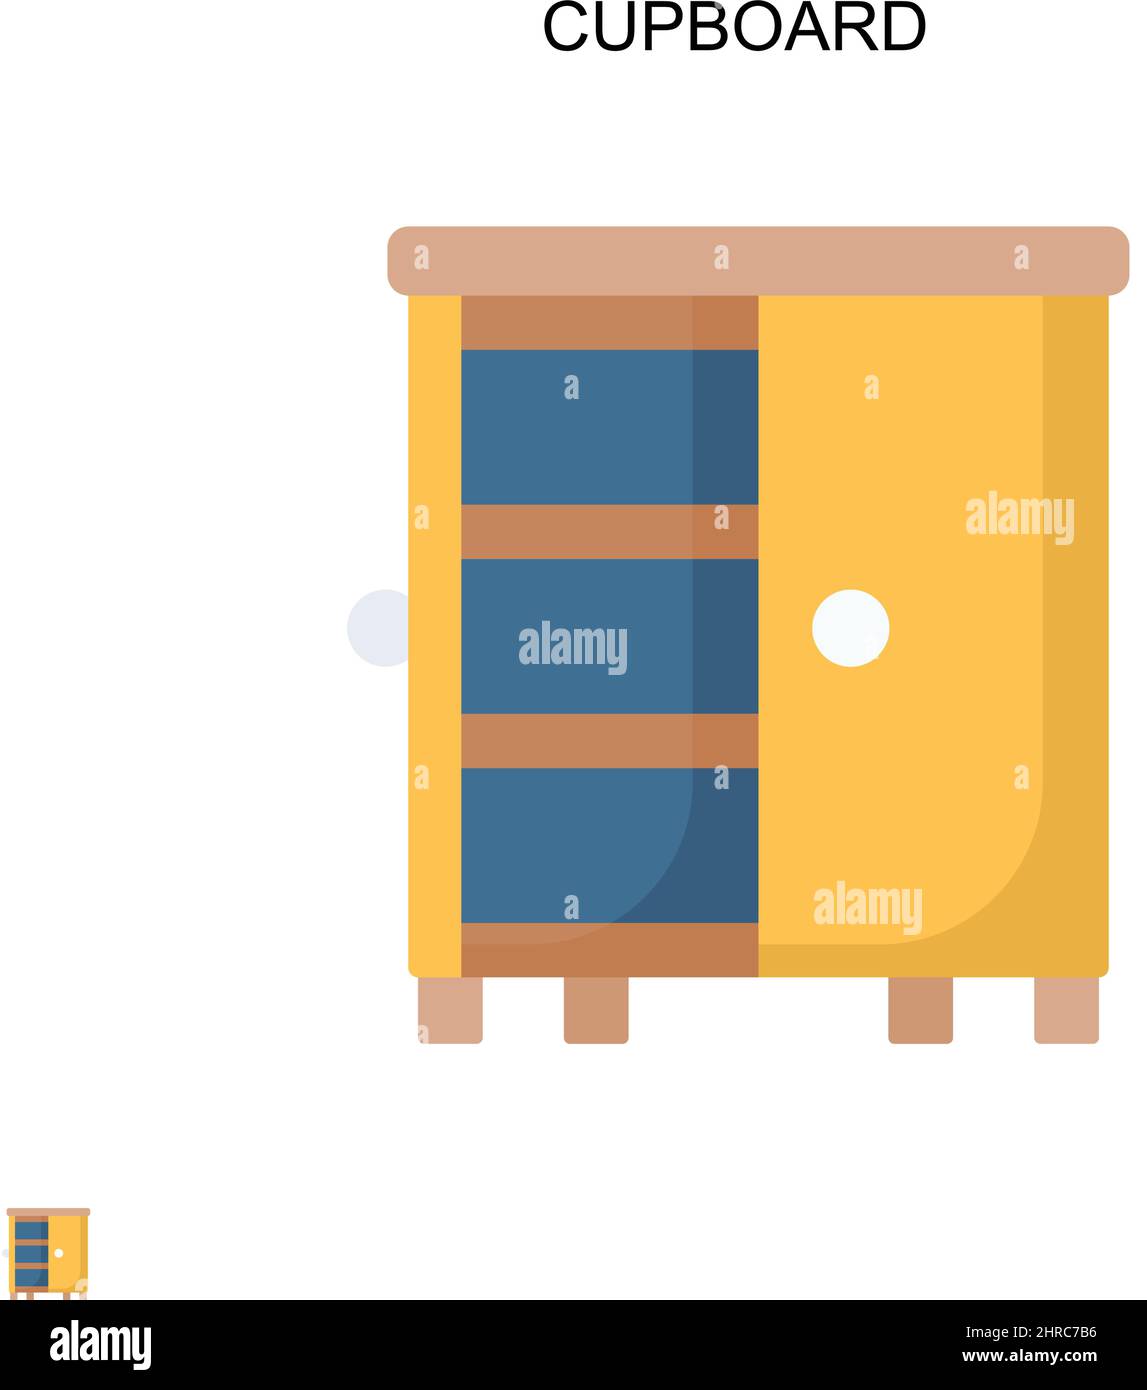 Cupboard Simple vector icon. Illustration symbol design template for web mobile UI element. Stock Vector